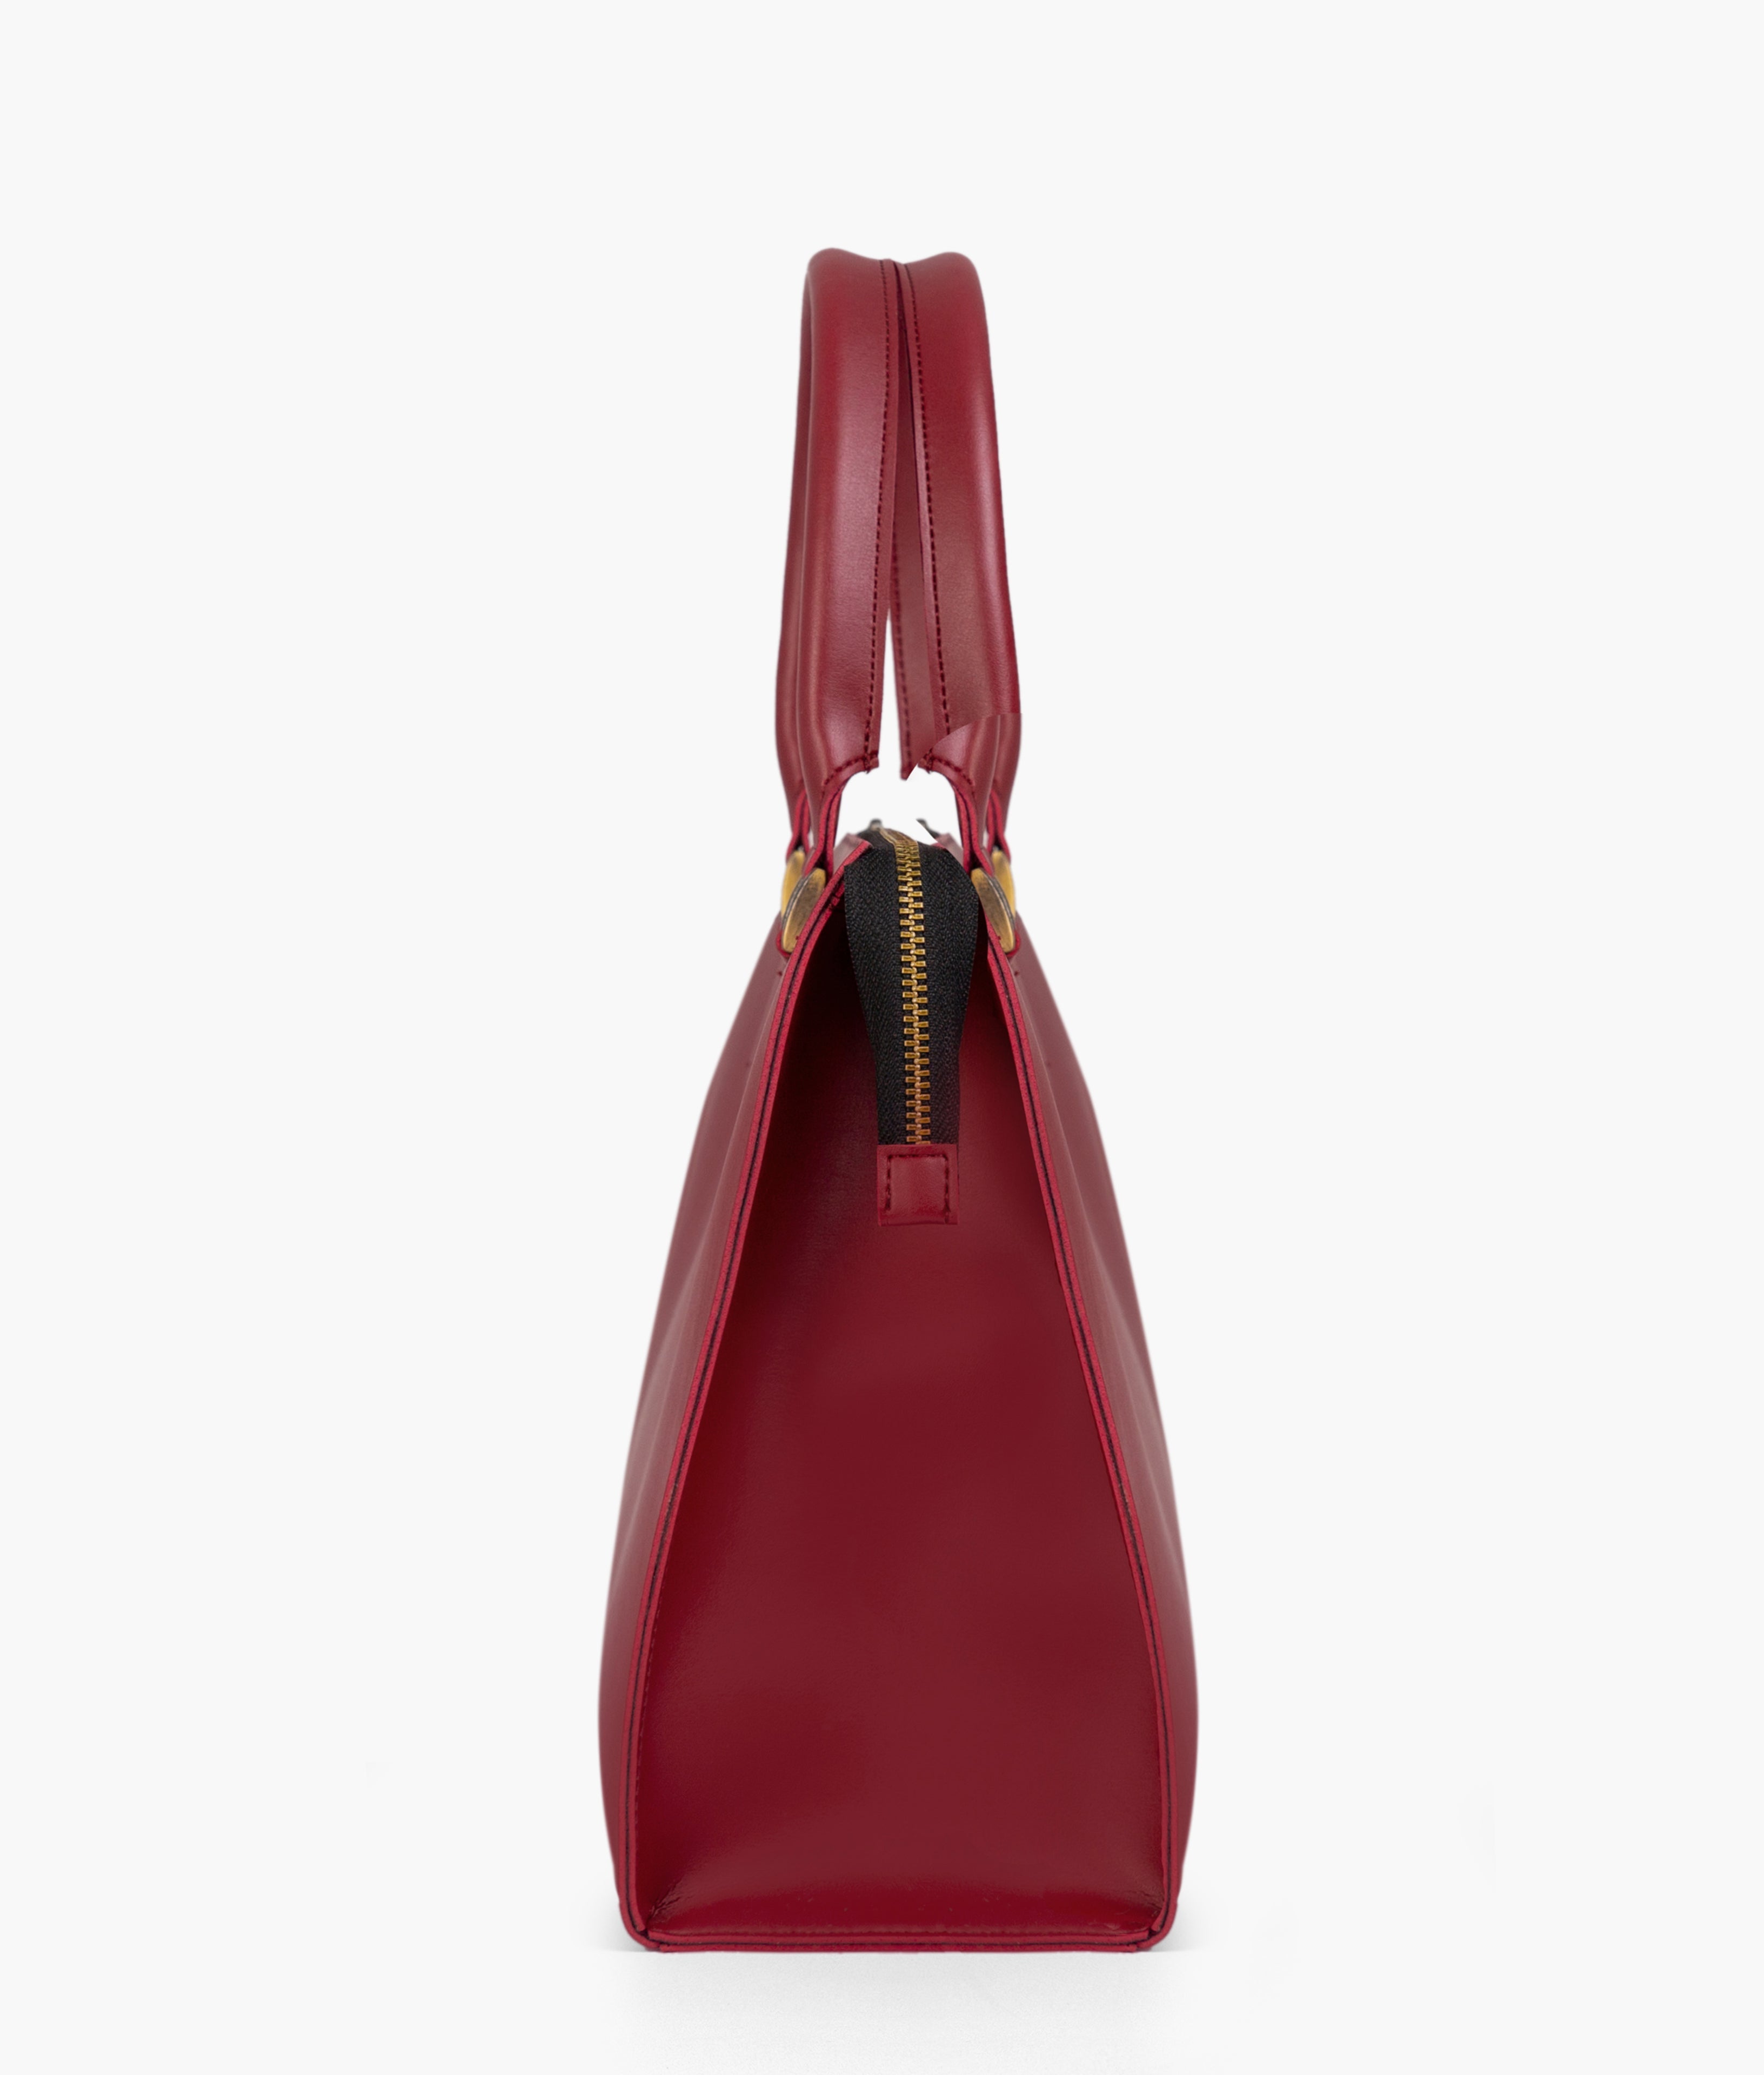 Maroon Handbag For Women 599